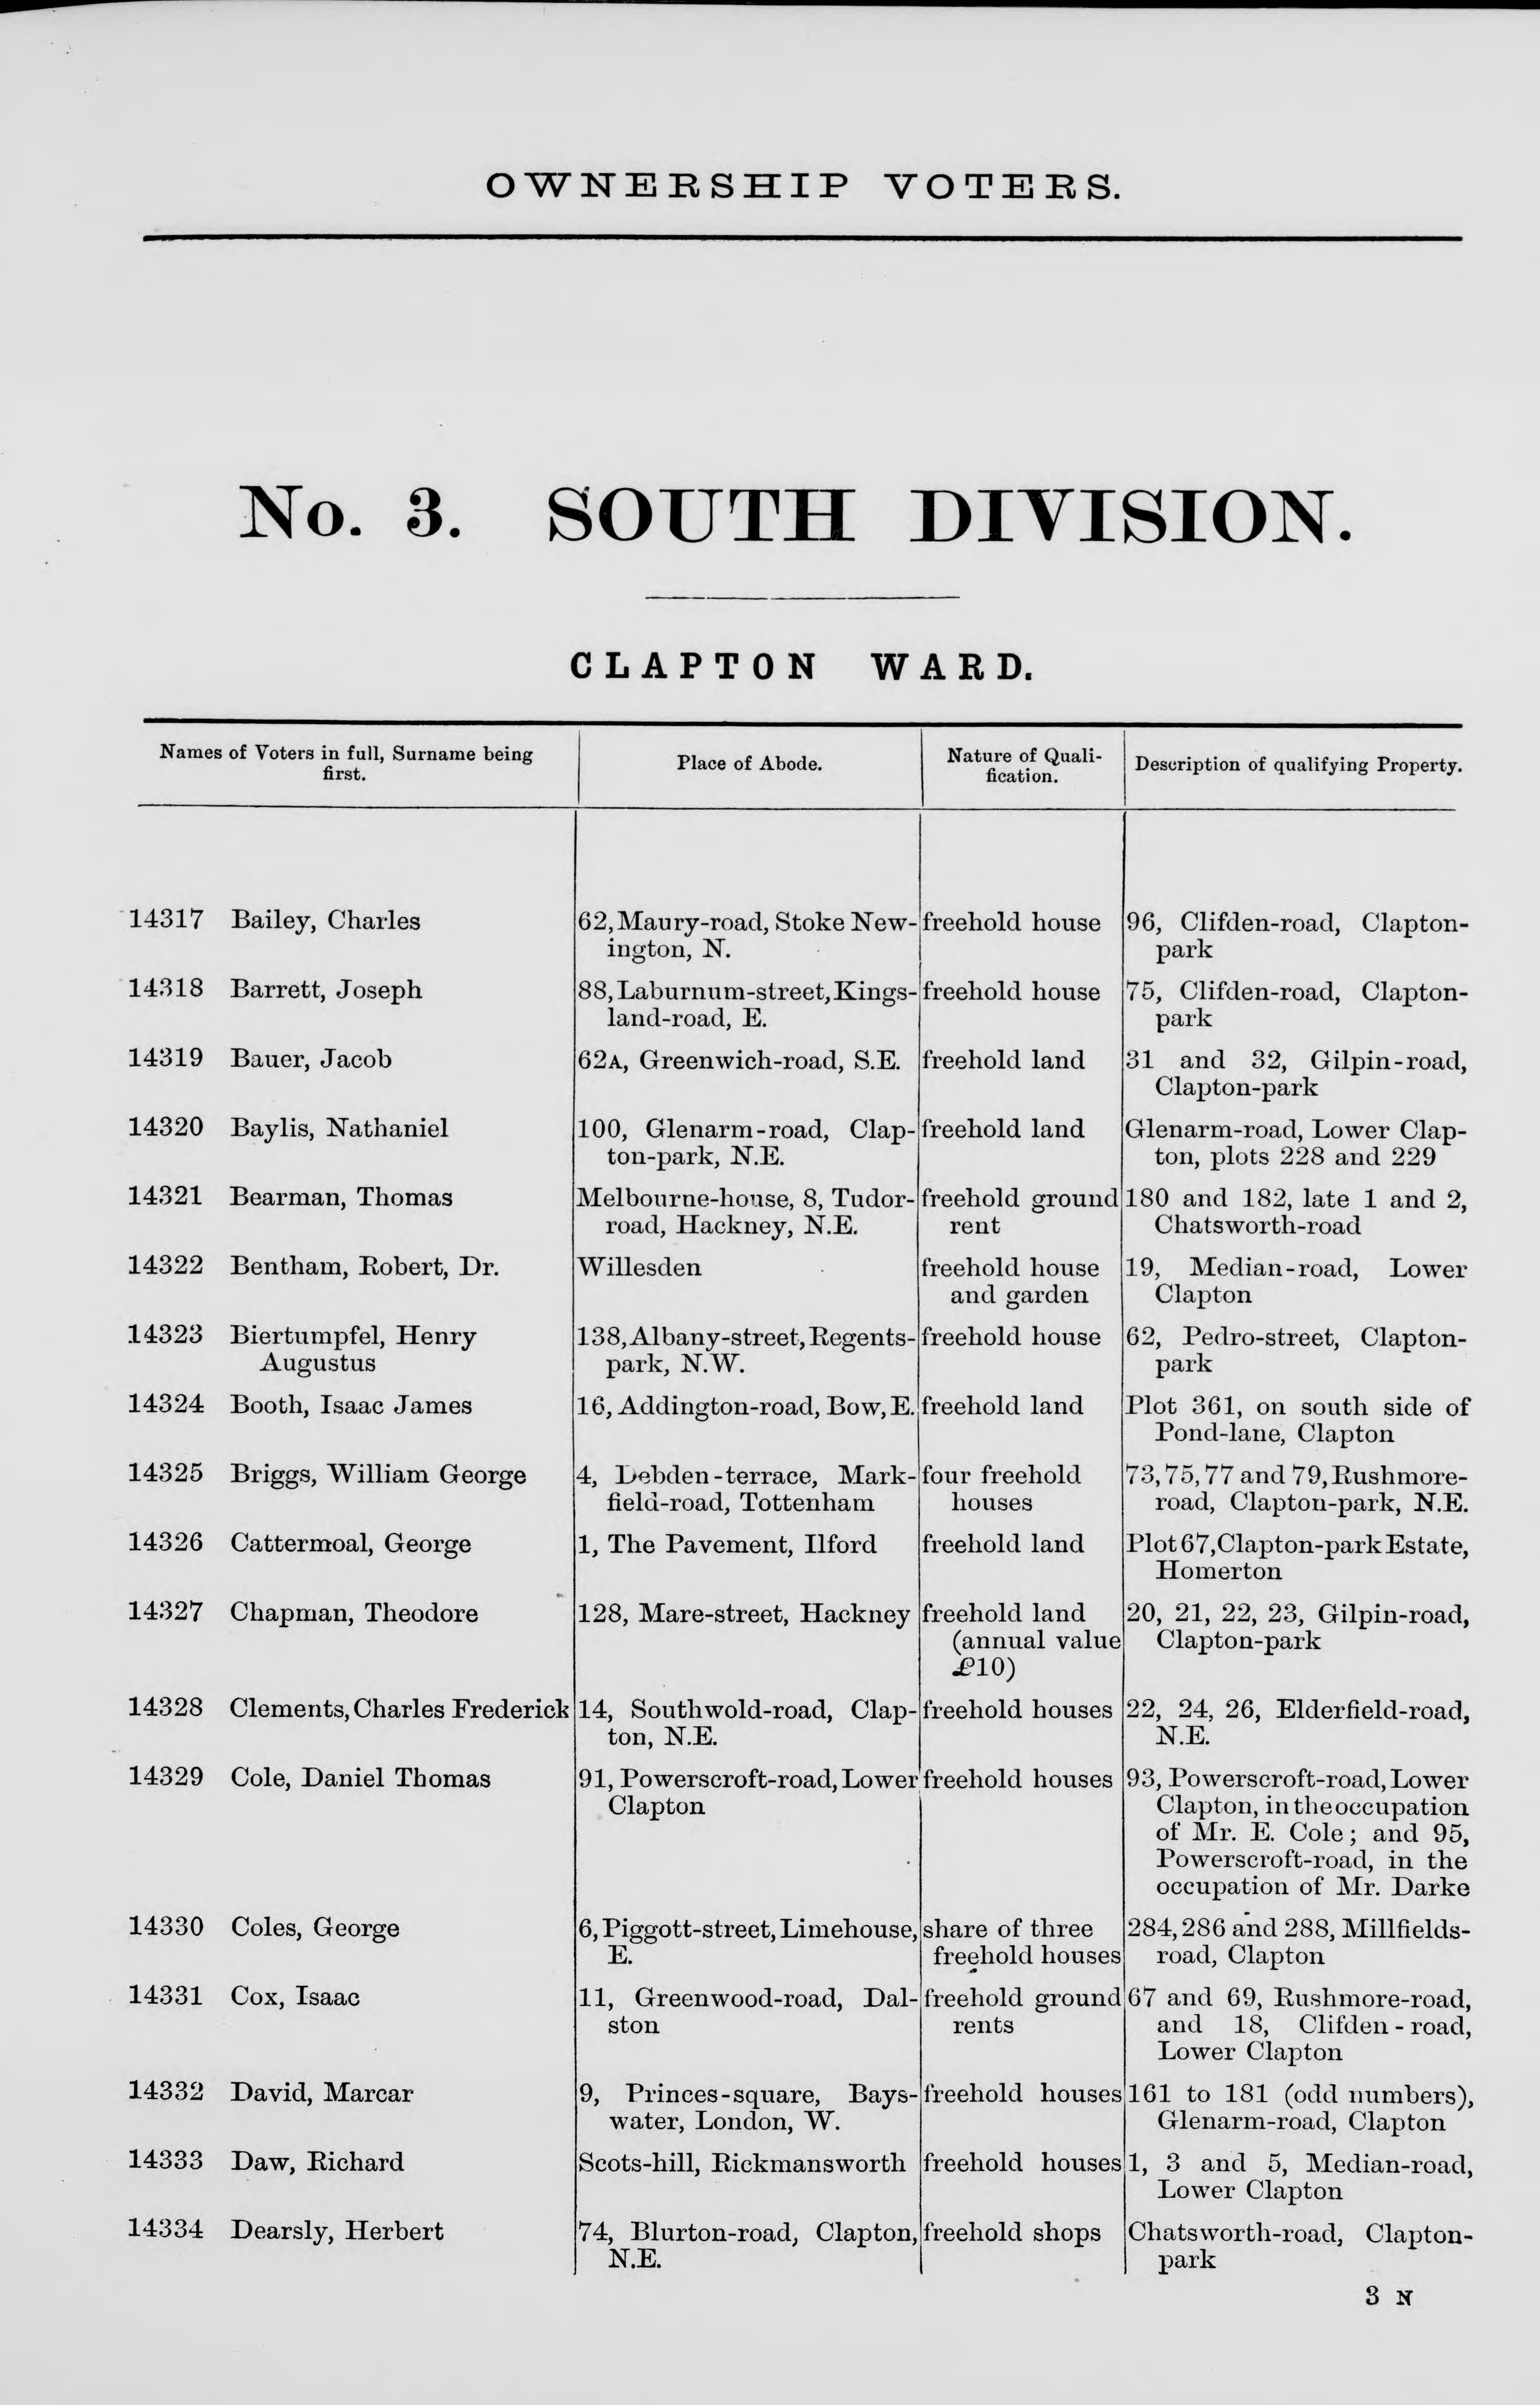 Thomas Bearman electoral register 1898